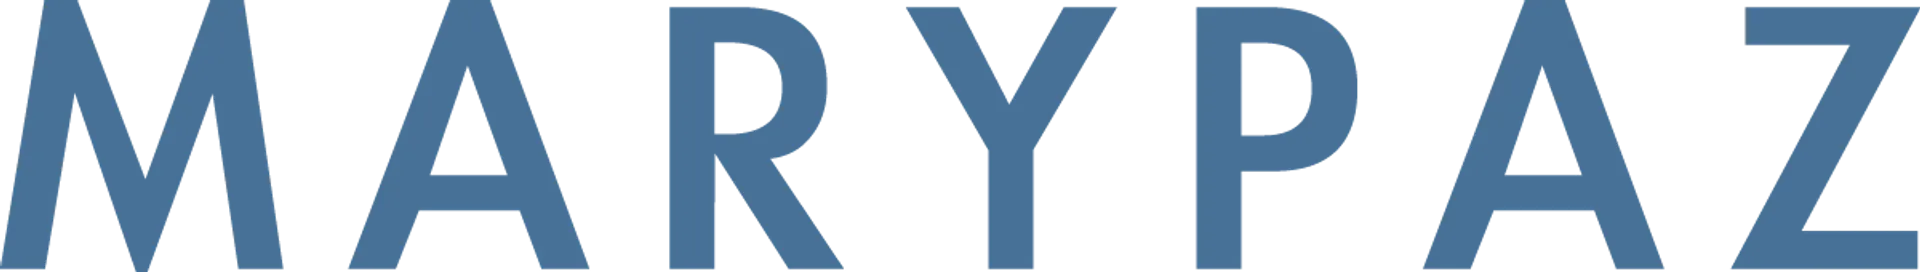 MARYPAZ logo